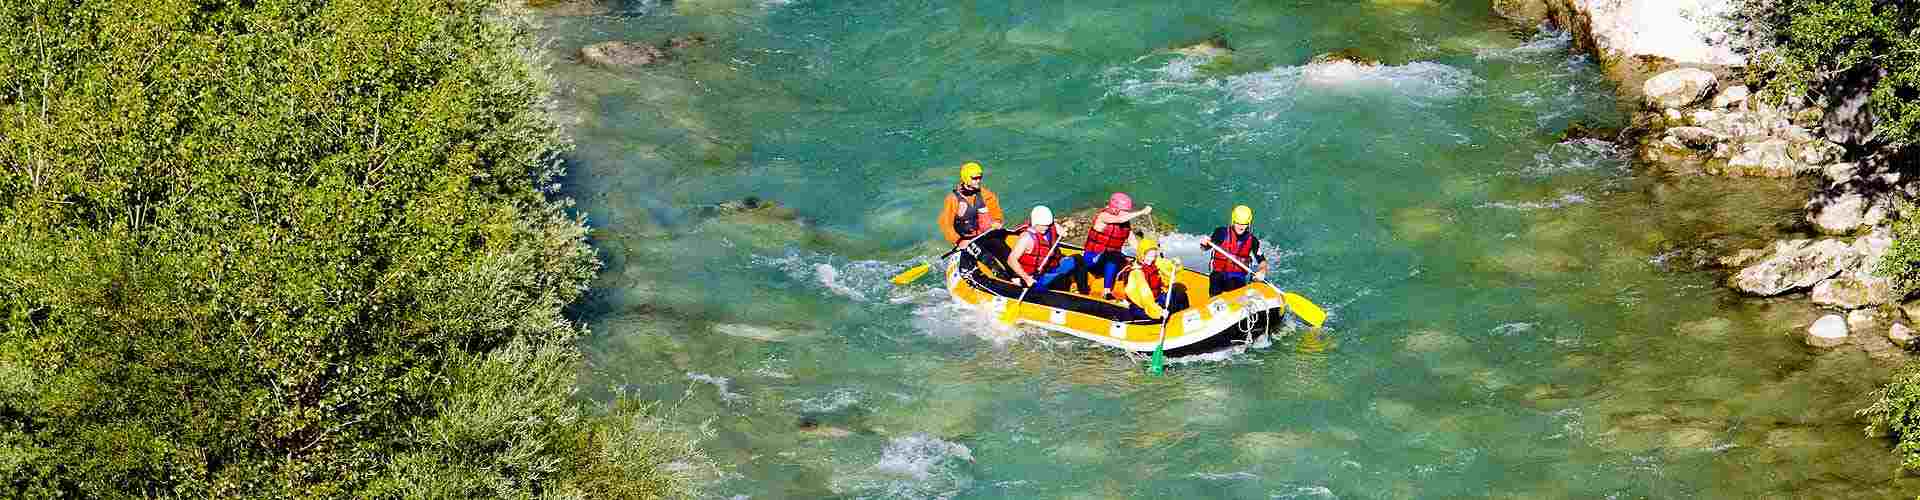 Rafting en Rincón del Obispo